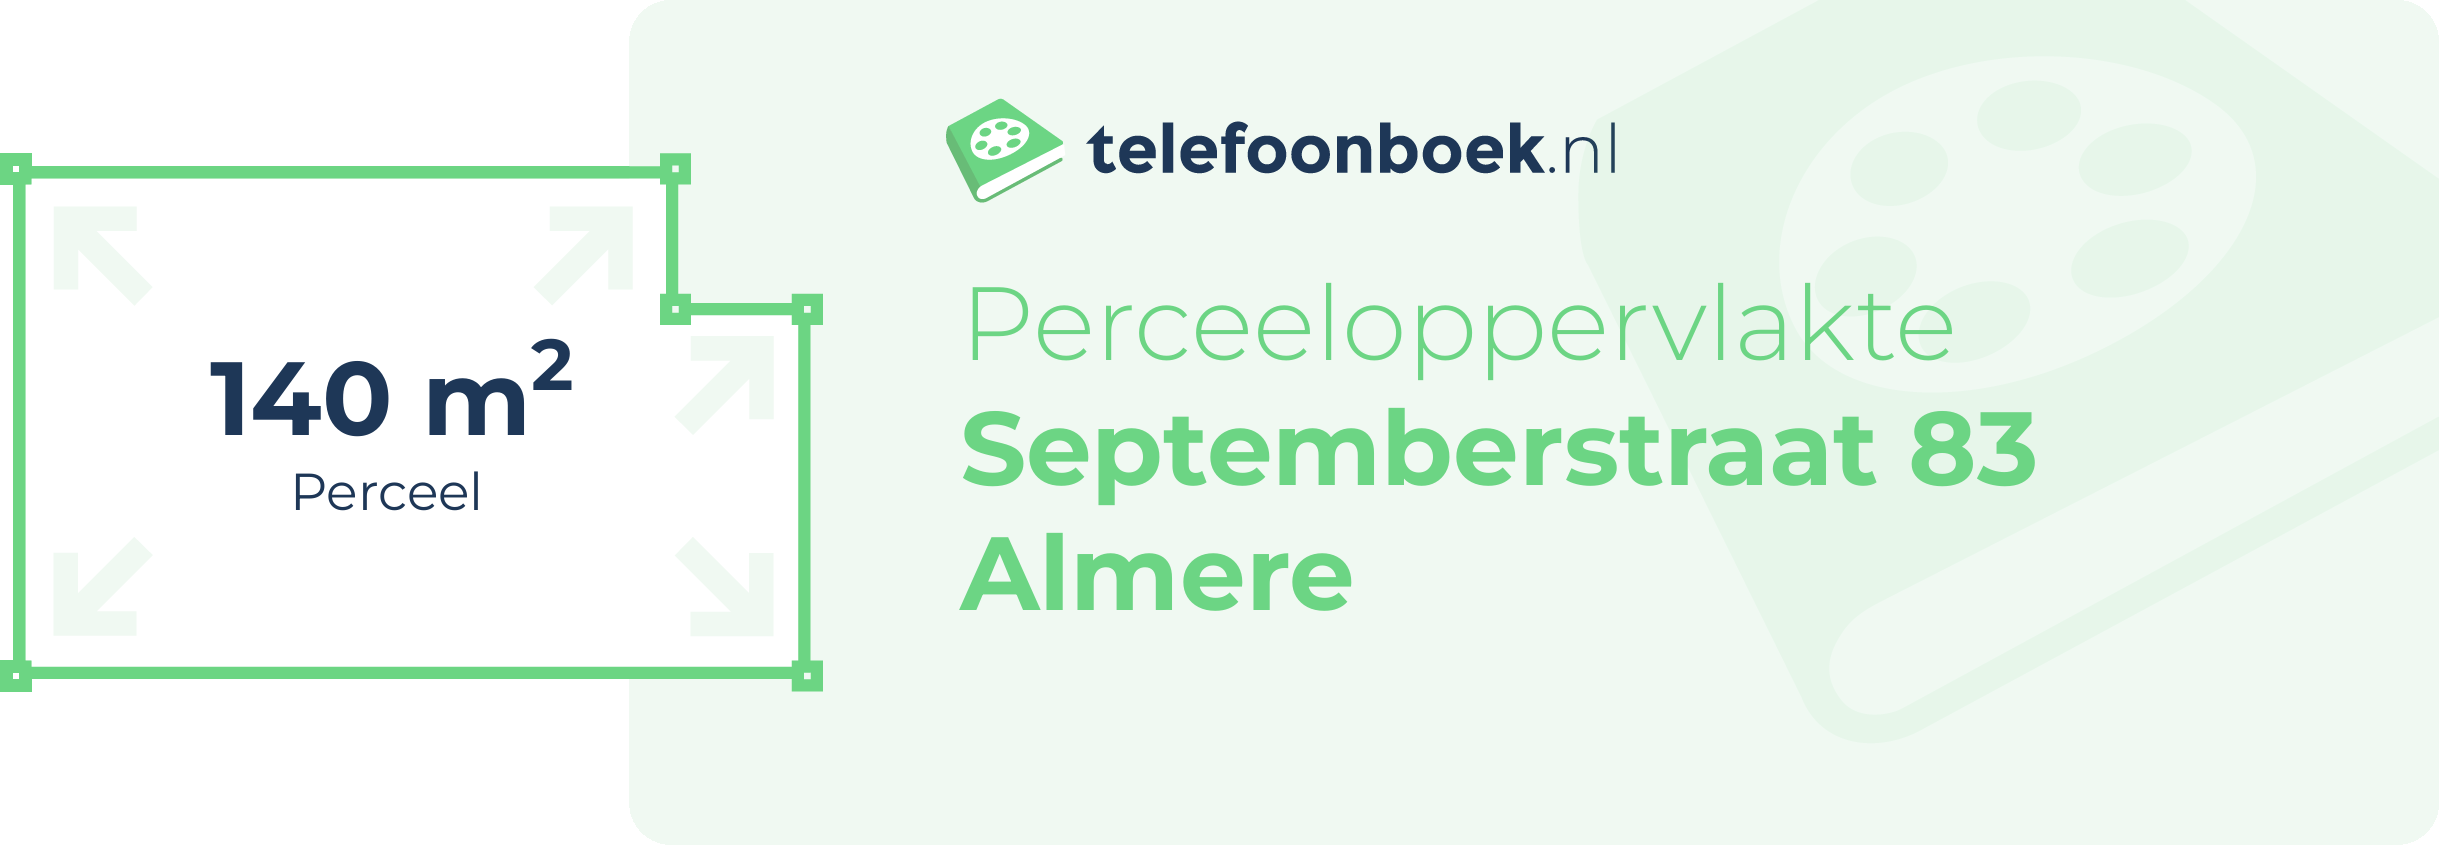 Perceeloppervlakte Septemberstraat 83 Almere